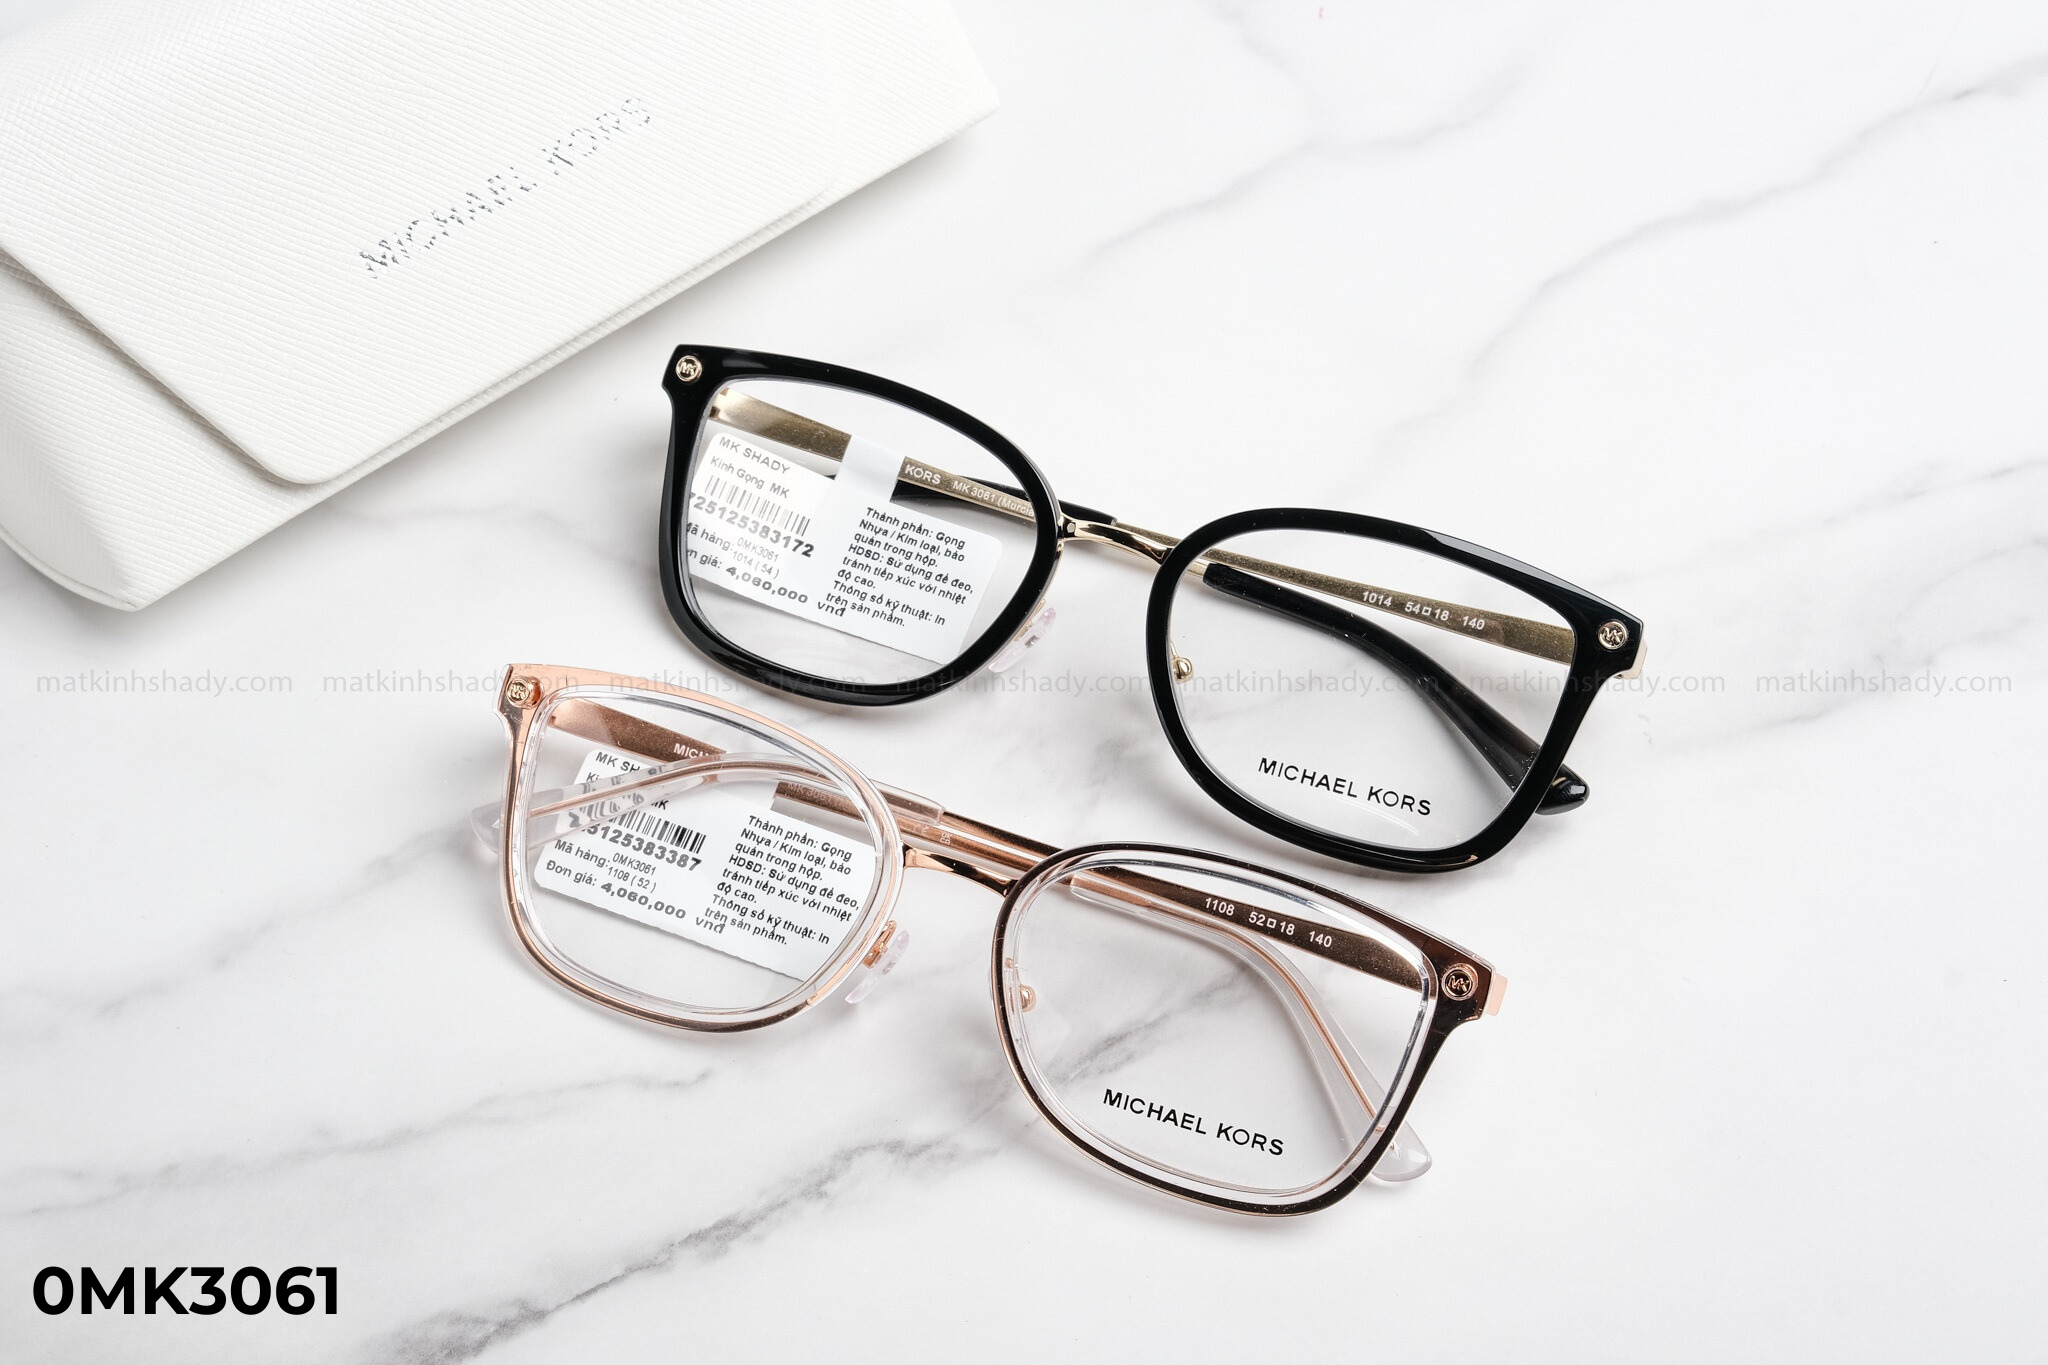  Michael Kors Eyewear - Glasses - 0MK3061 